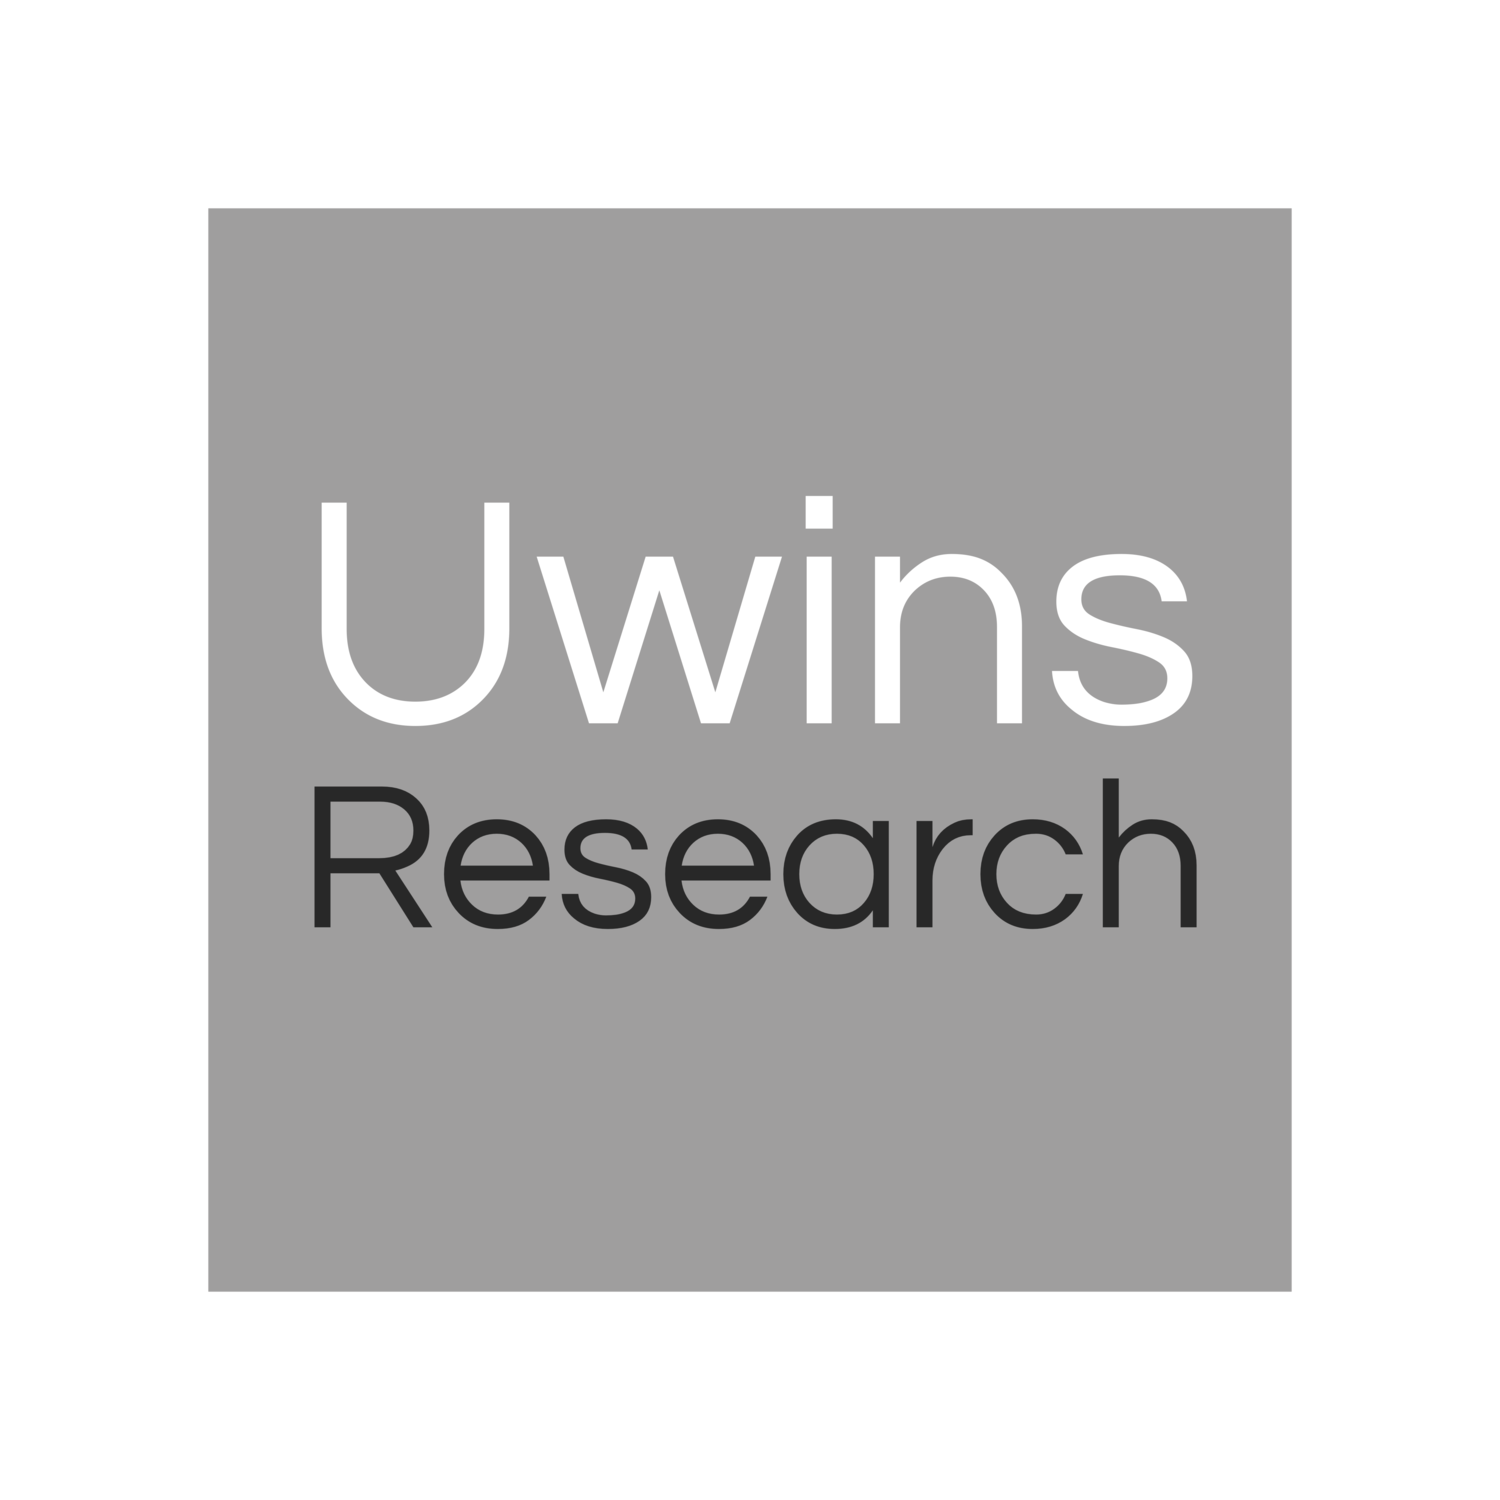 Uwins Research